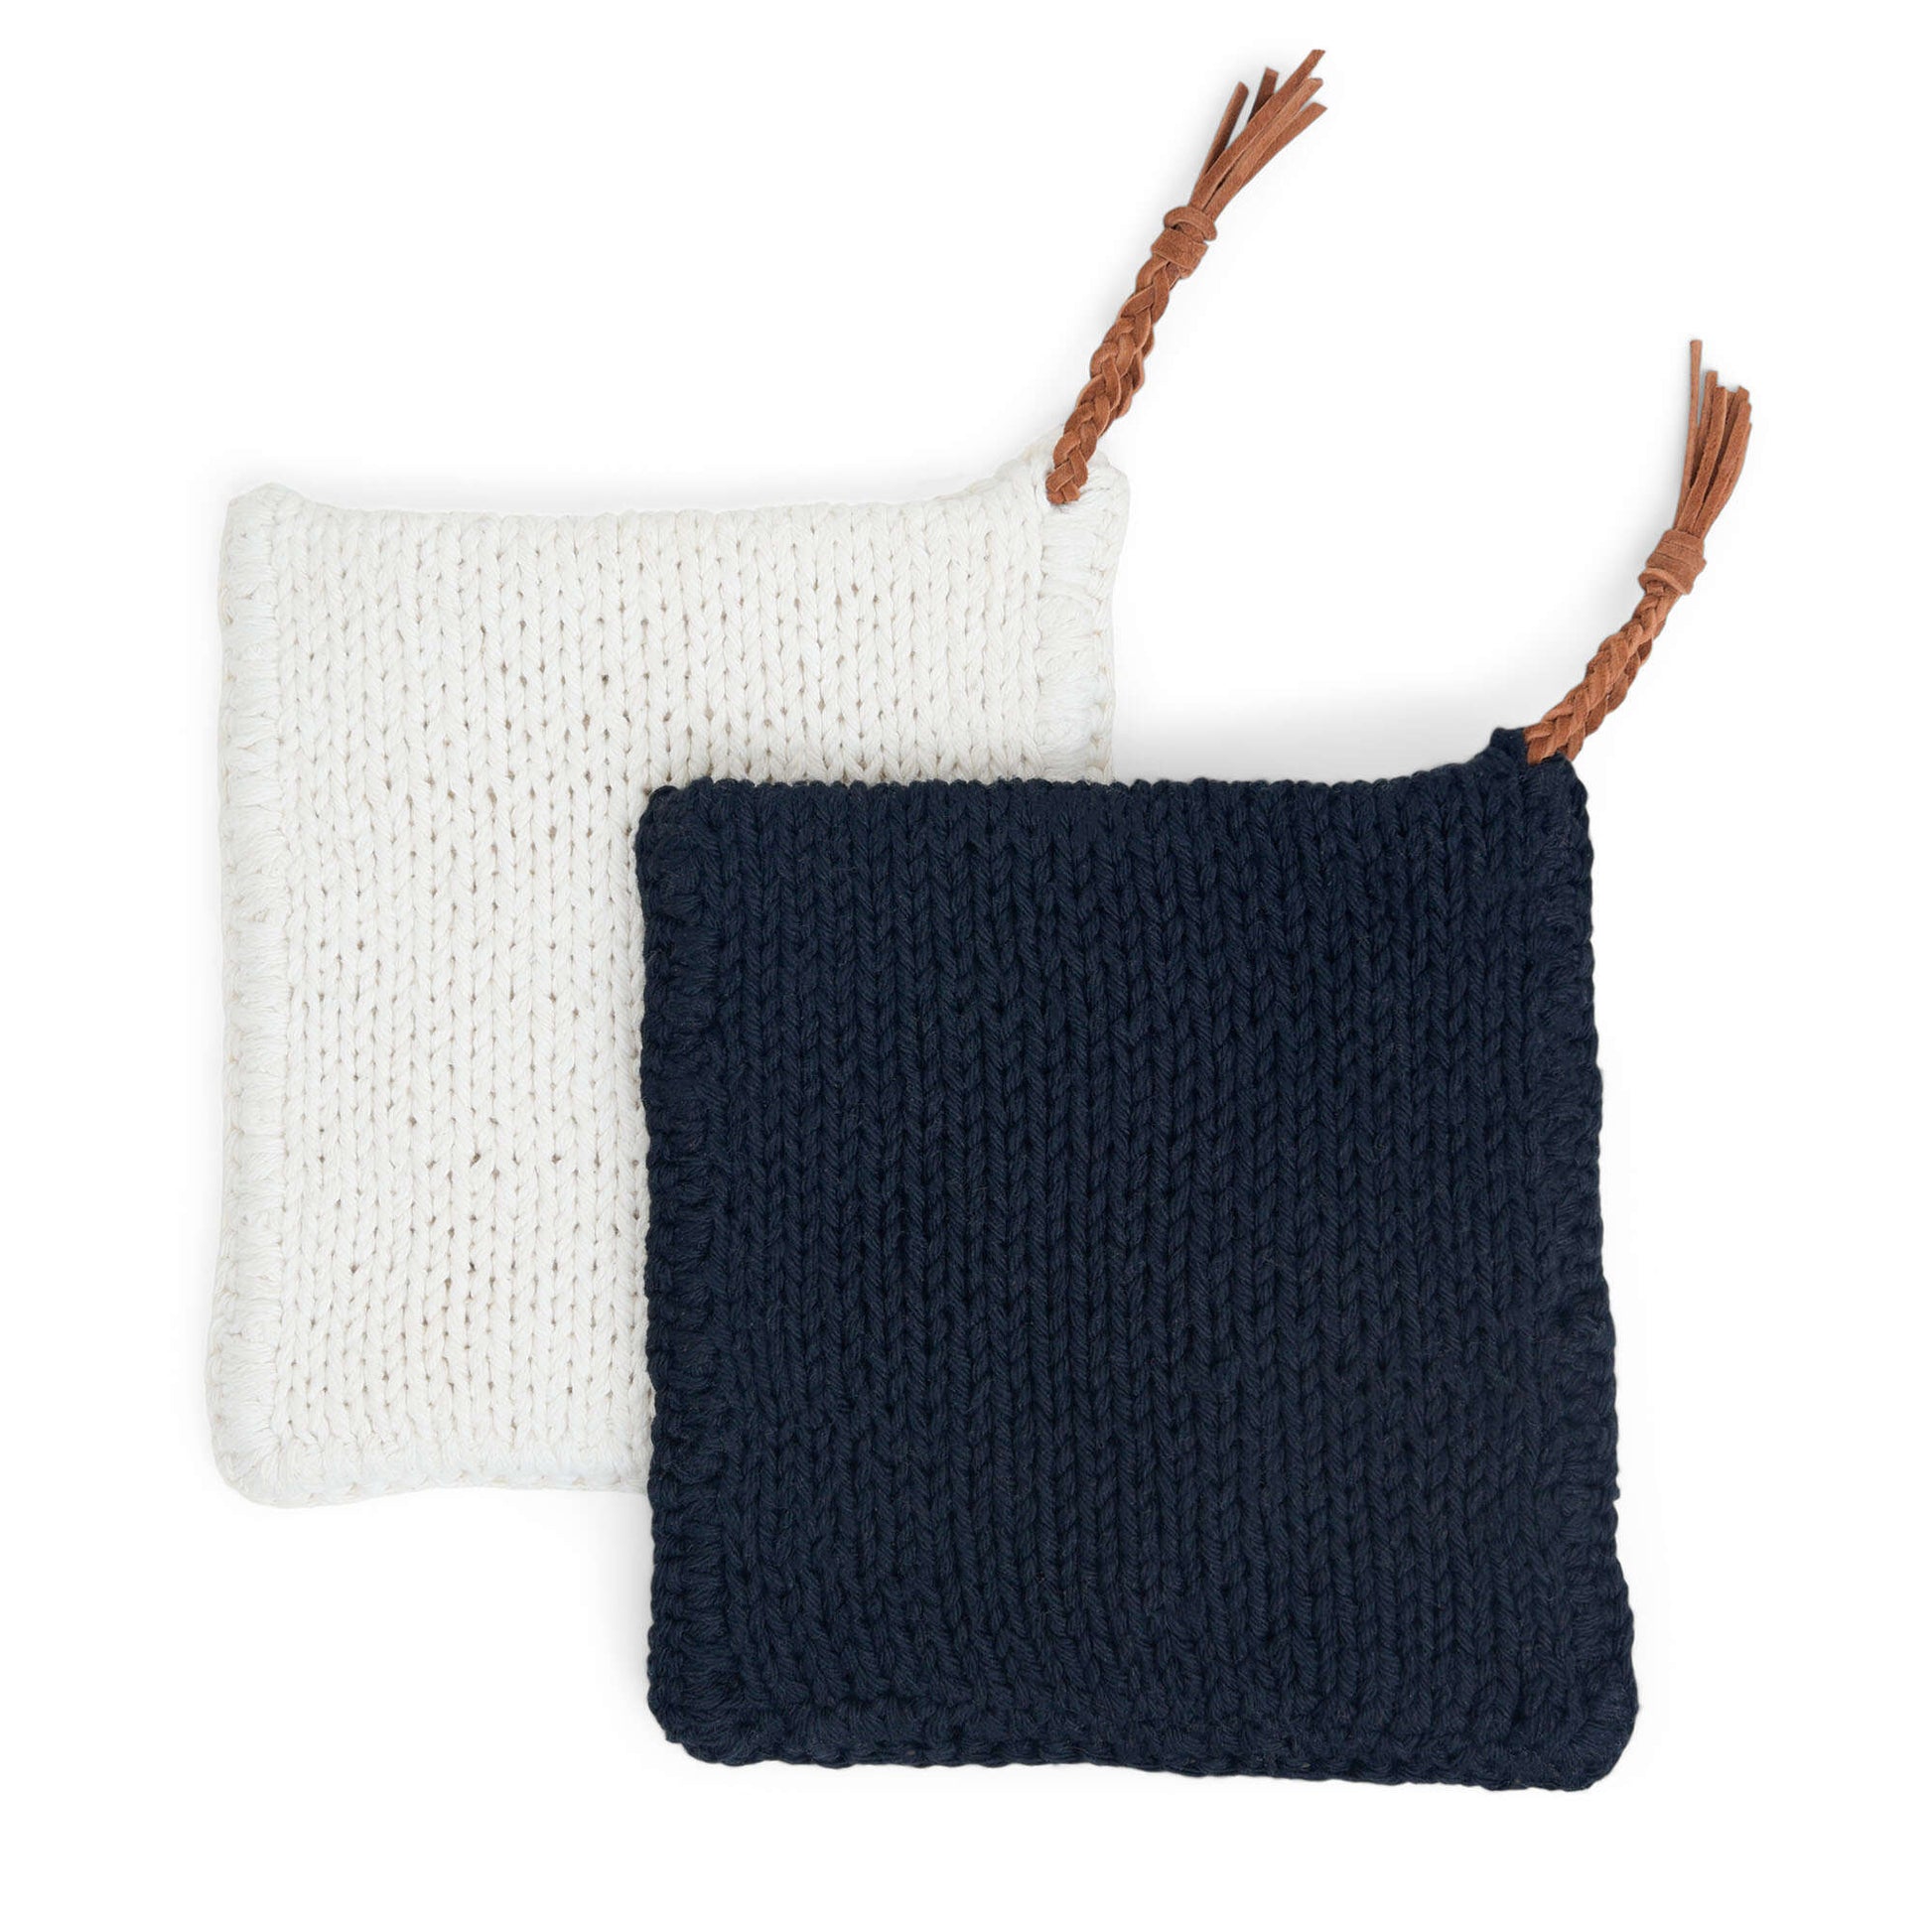 Free Lily Sugar'n Cream World's Best Knit Mitten Potholder Pattern |  Yarnspirations